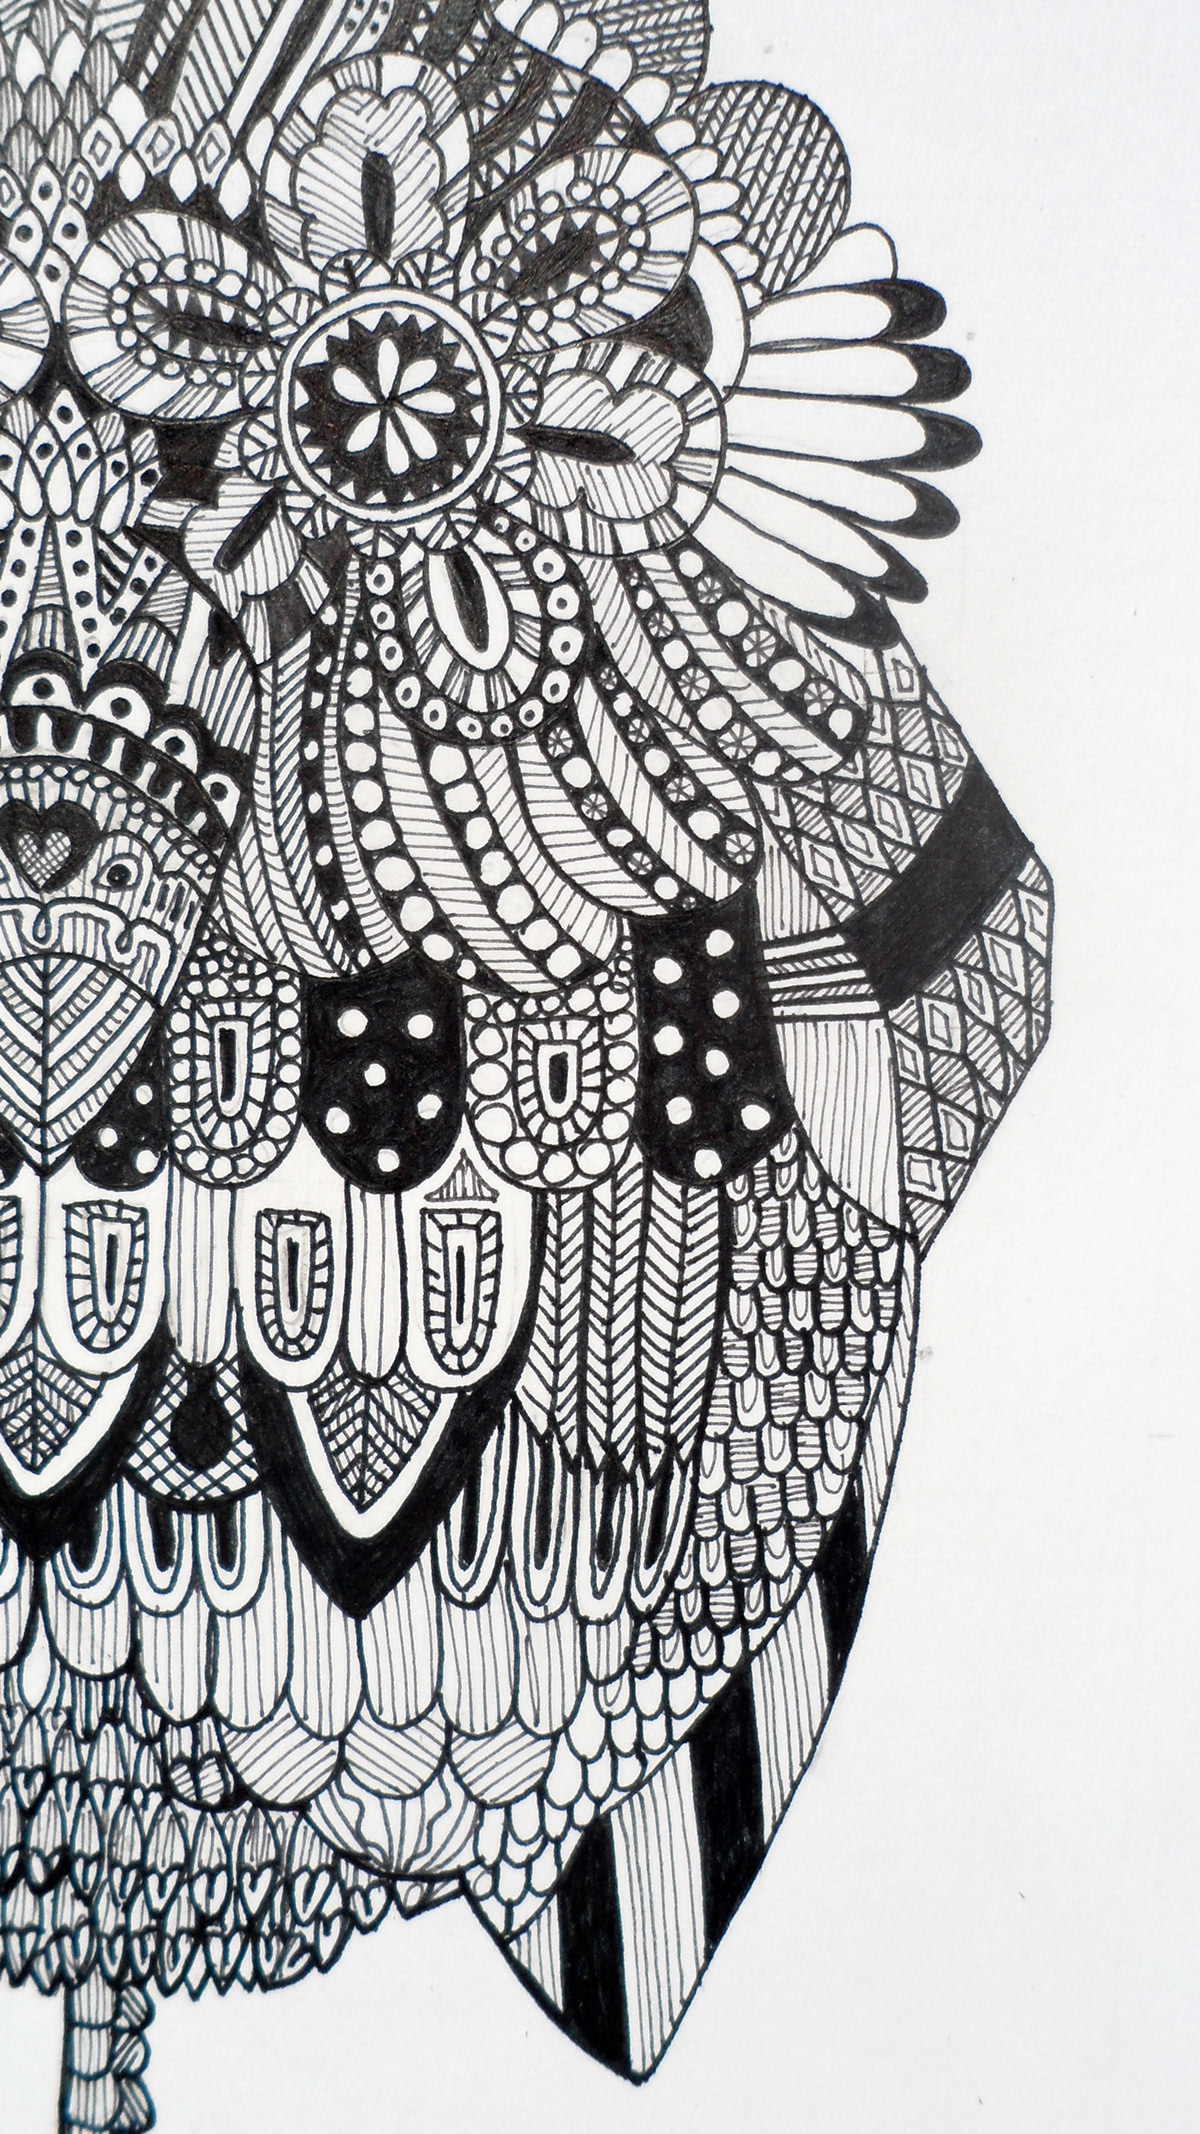 hibou owl trait noir blanc dessin illu